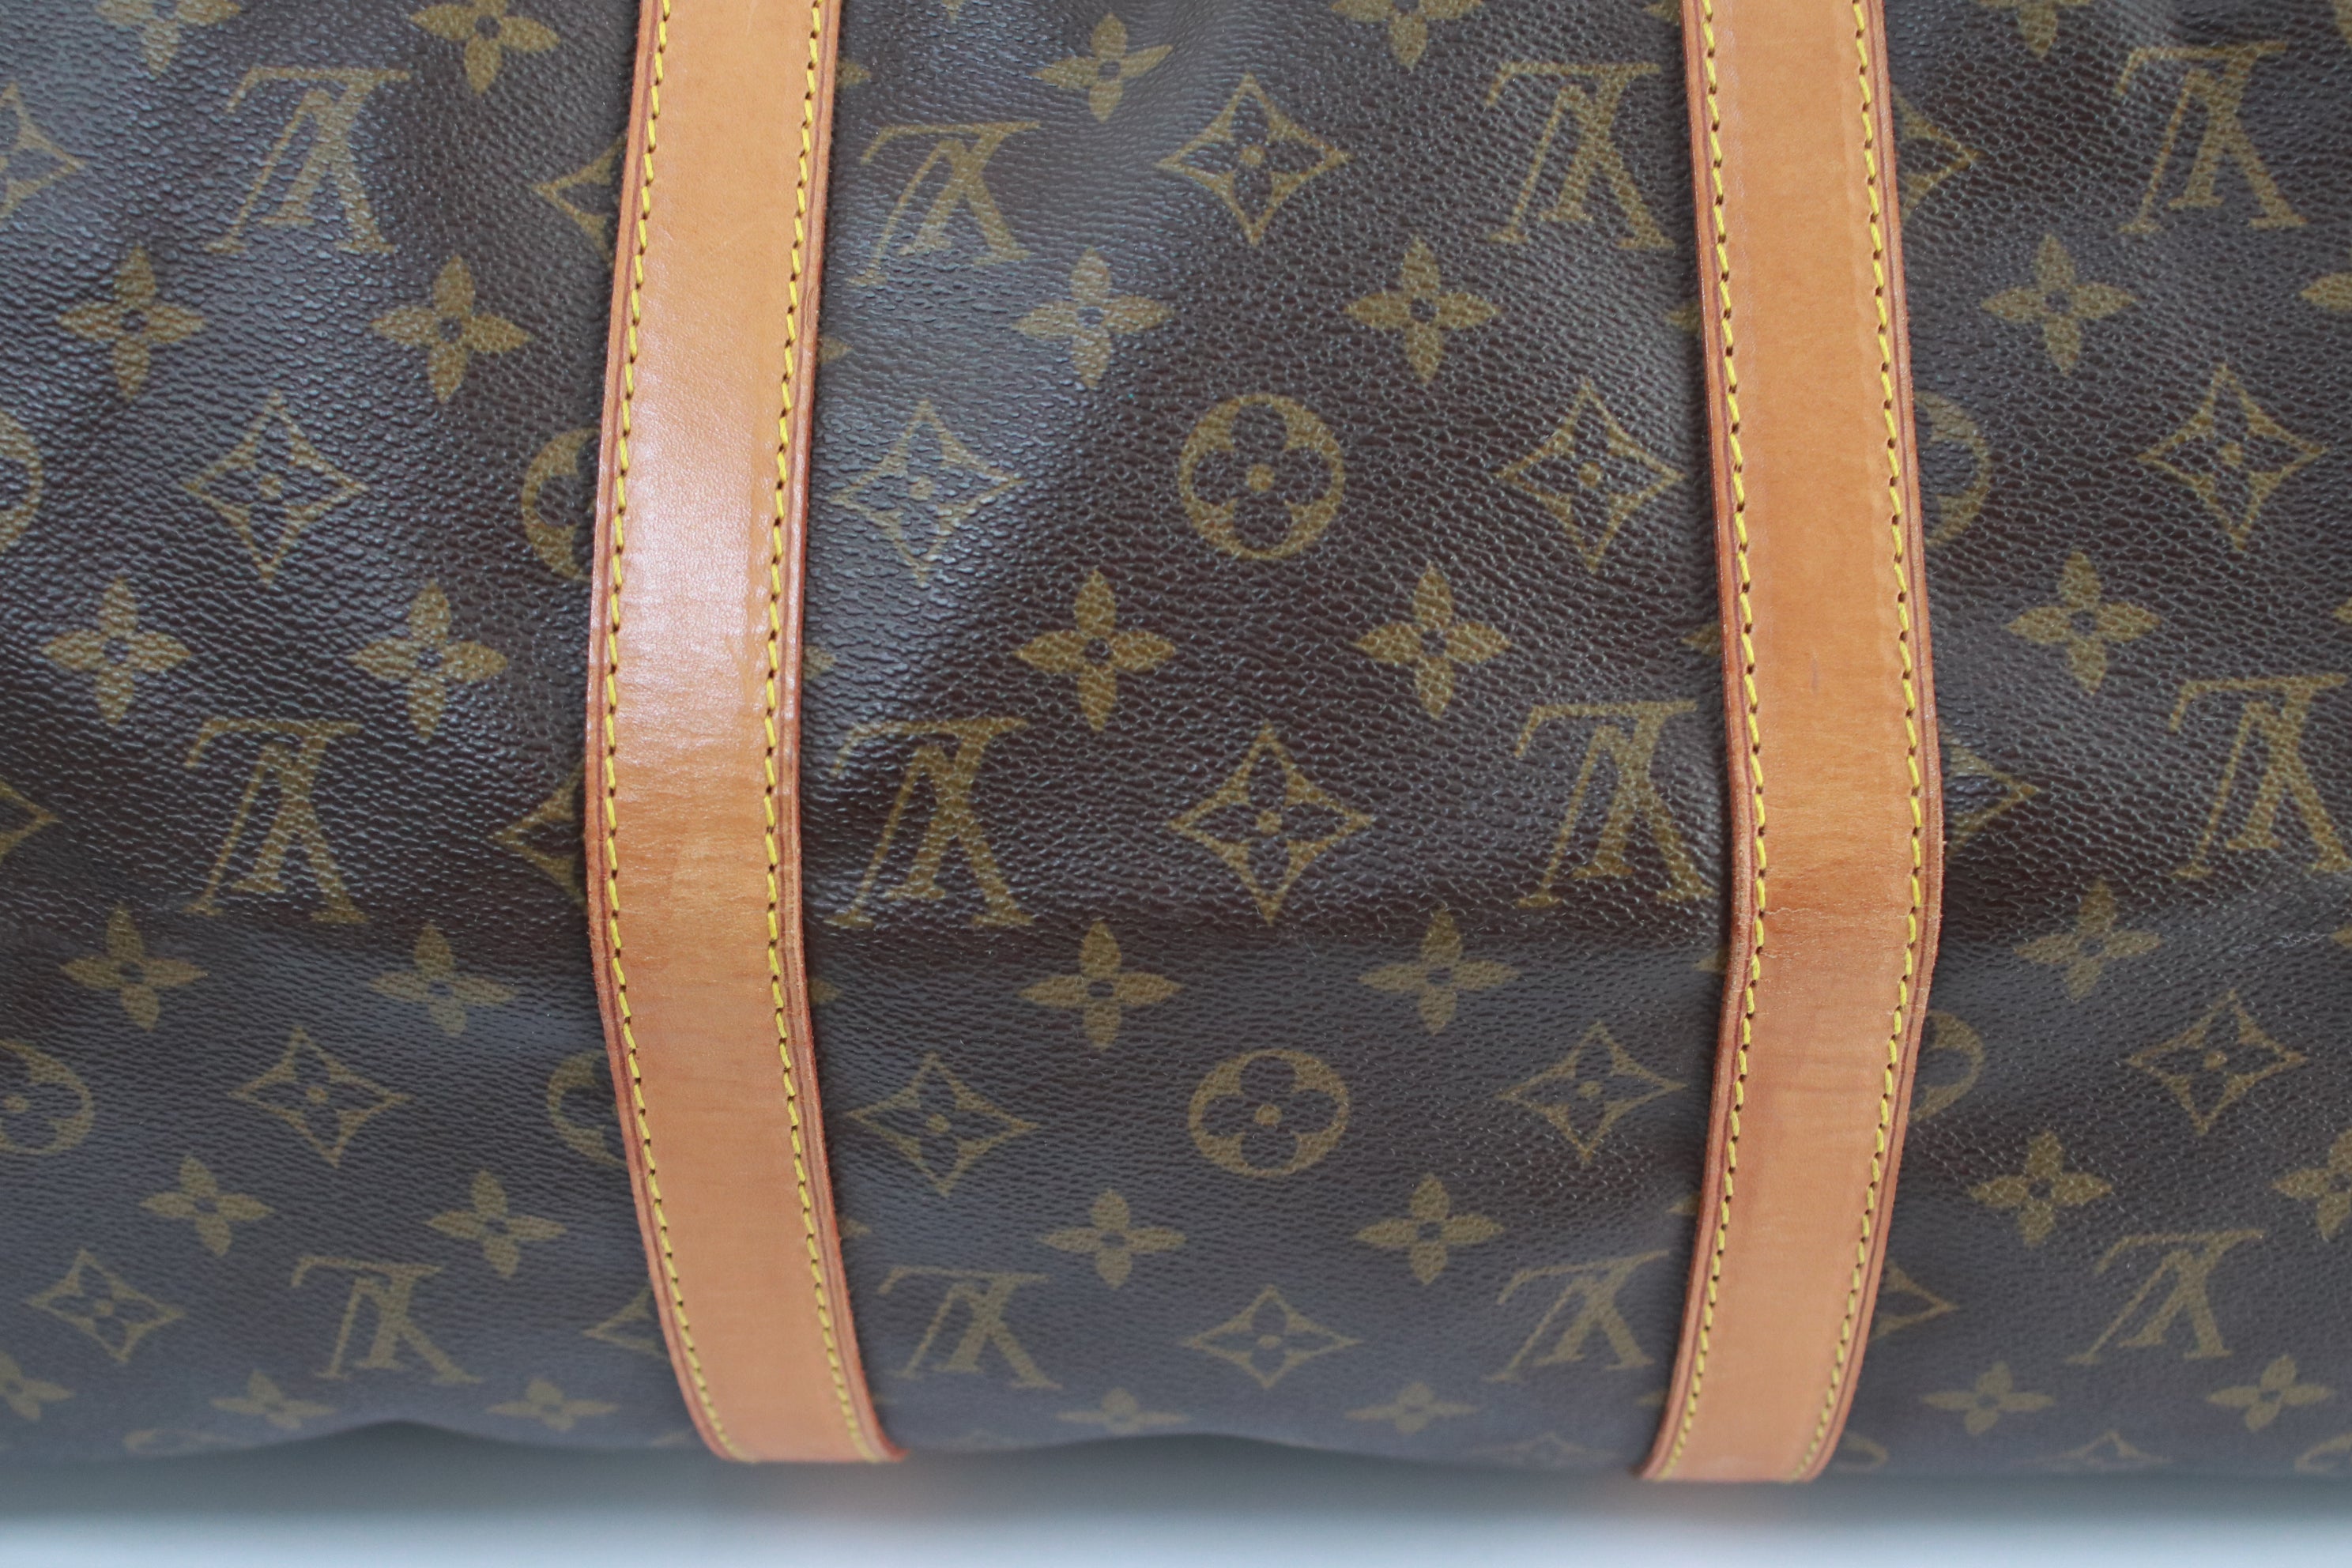 Louis Vuitton Keepall Bandoulière 50 Embossed Lv Duffle Bag